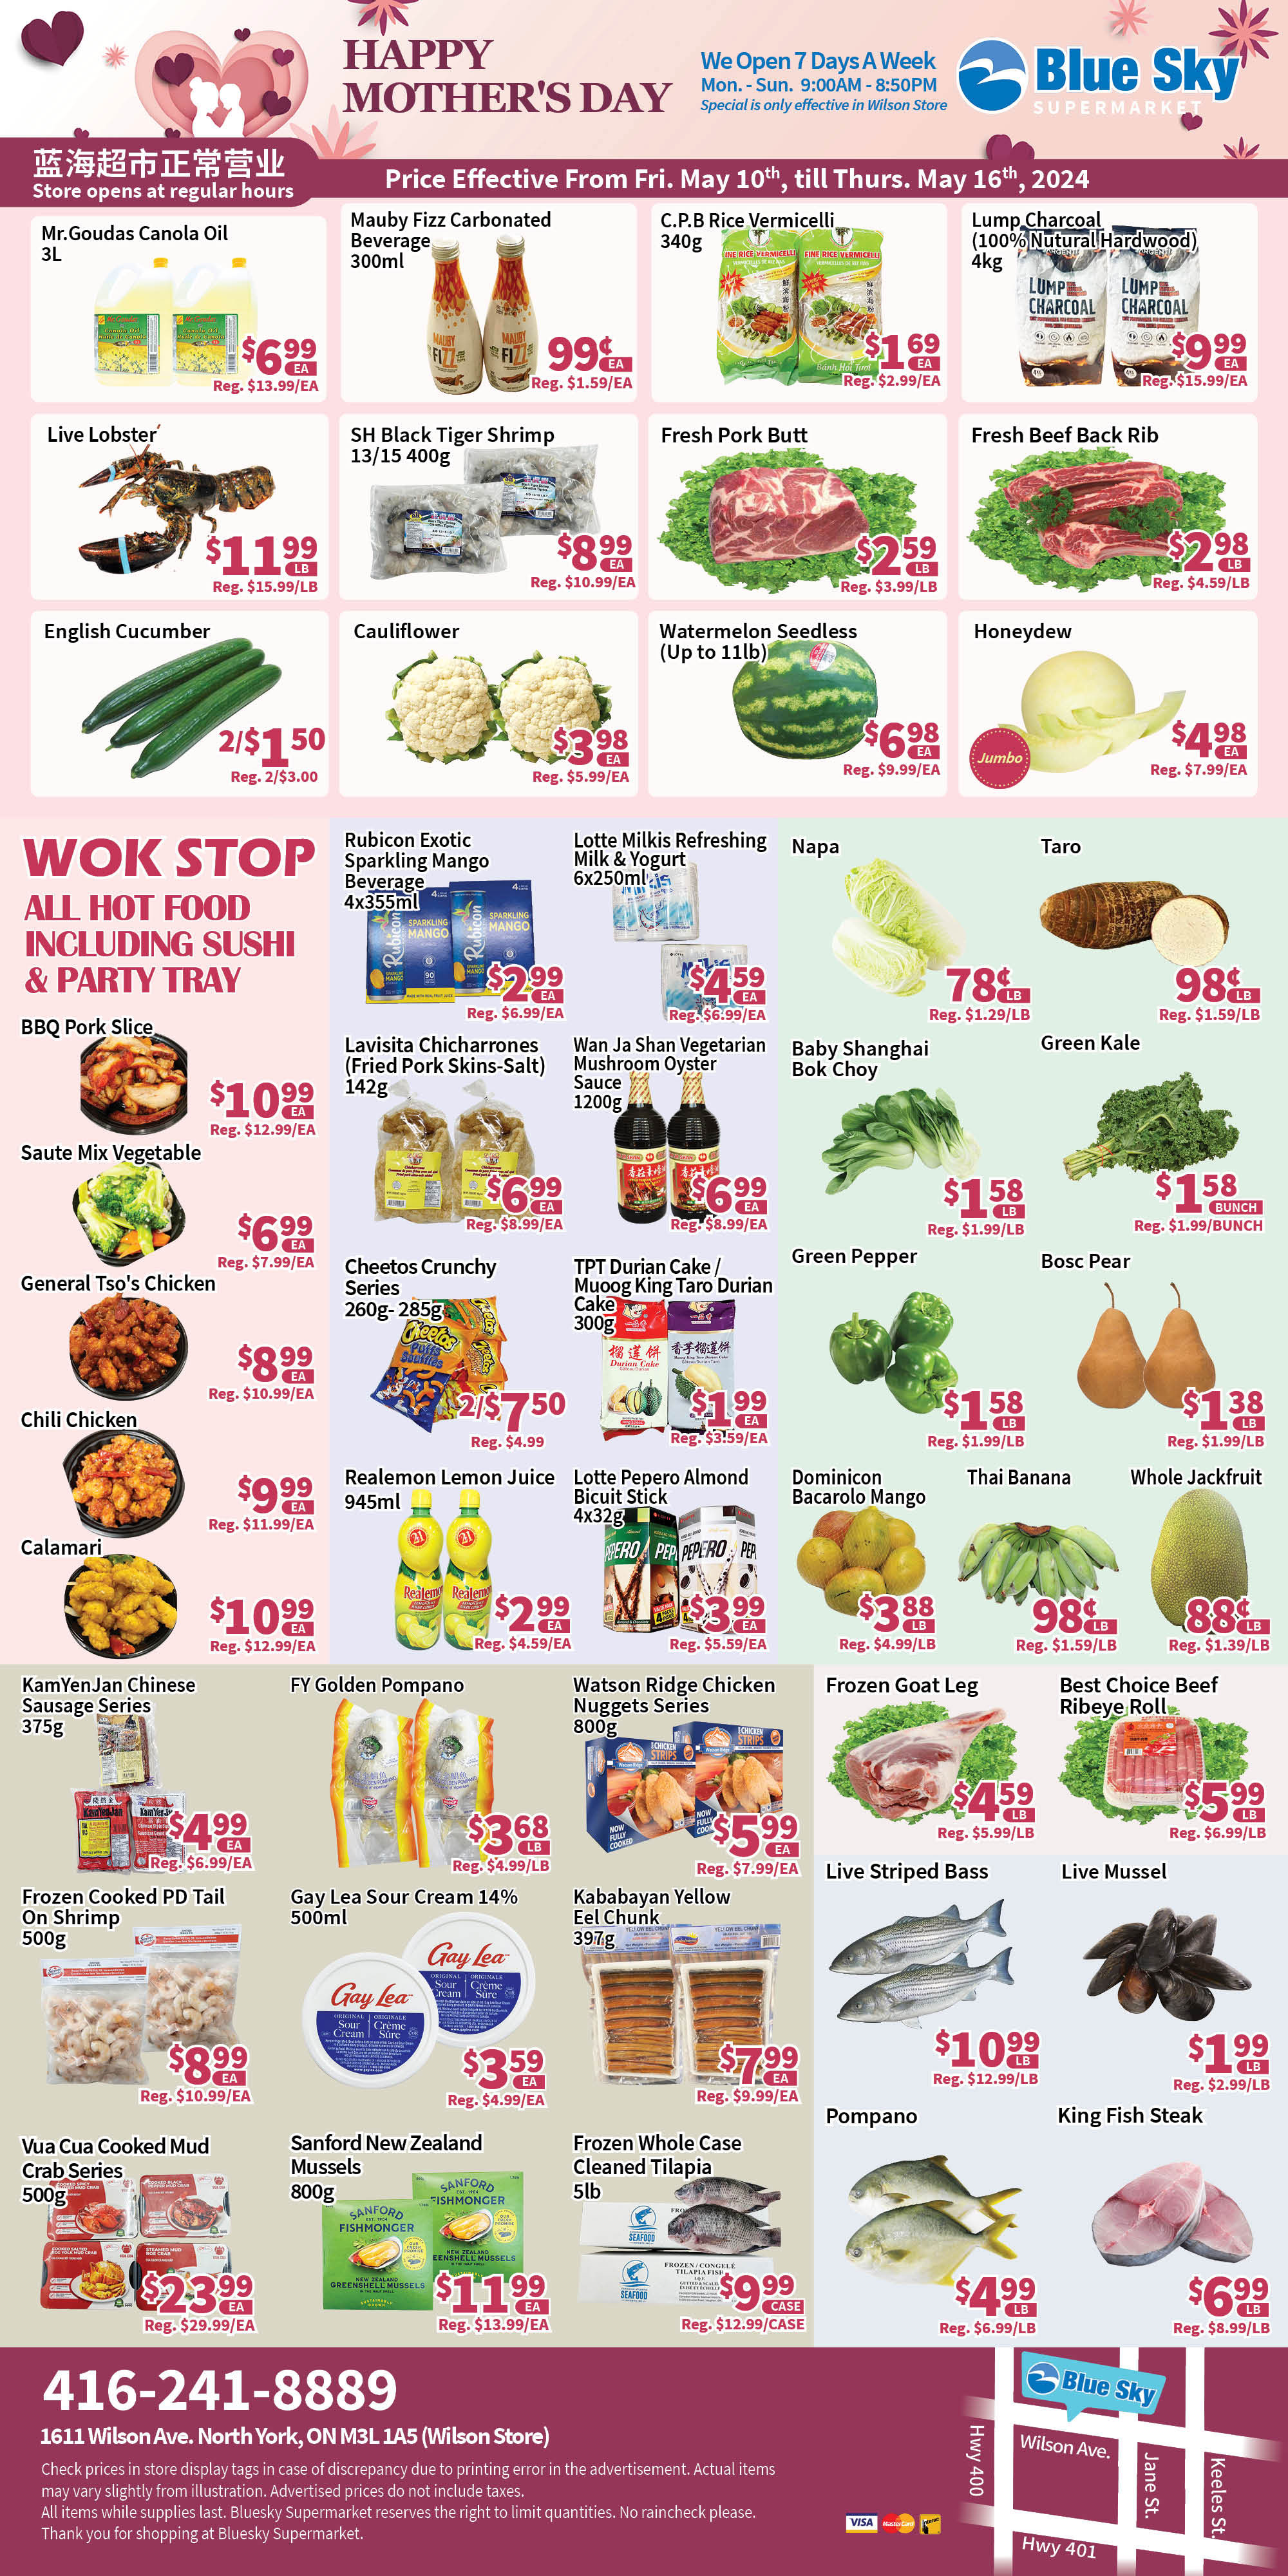 Blue Sky Supermarket - Wilson - Weekly Flyer Specials